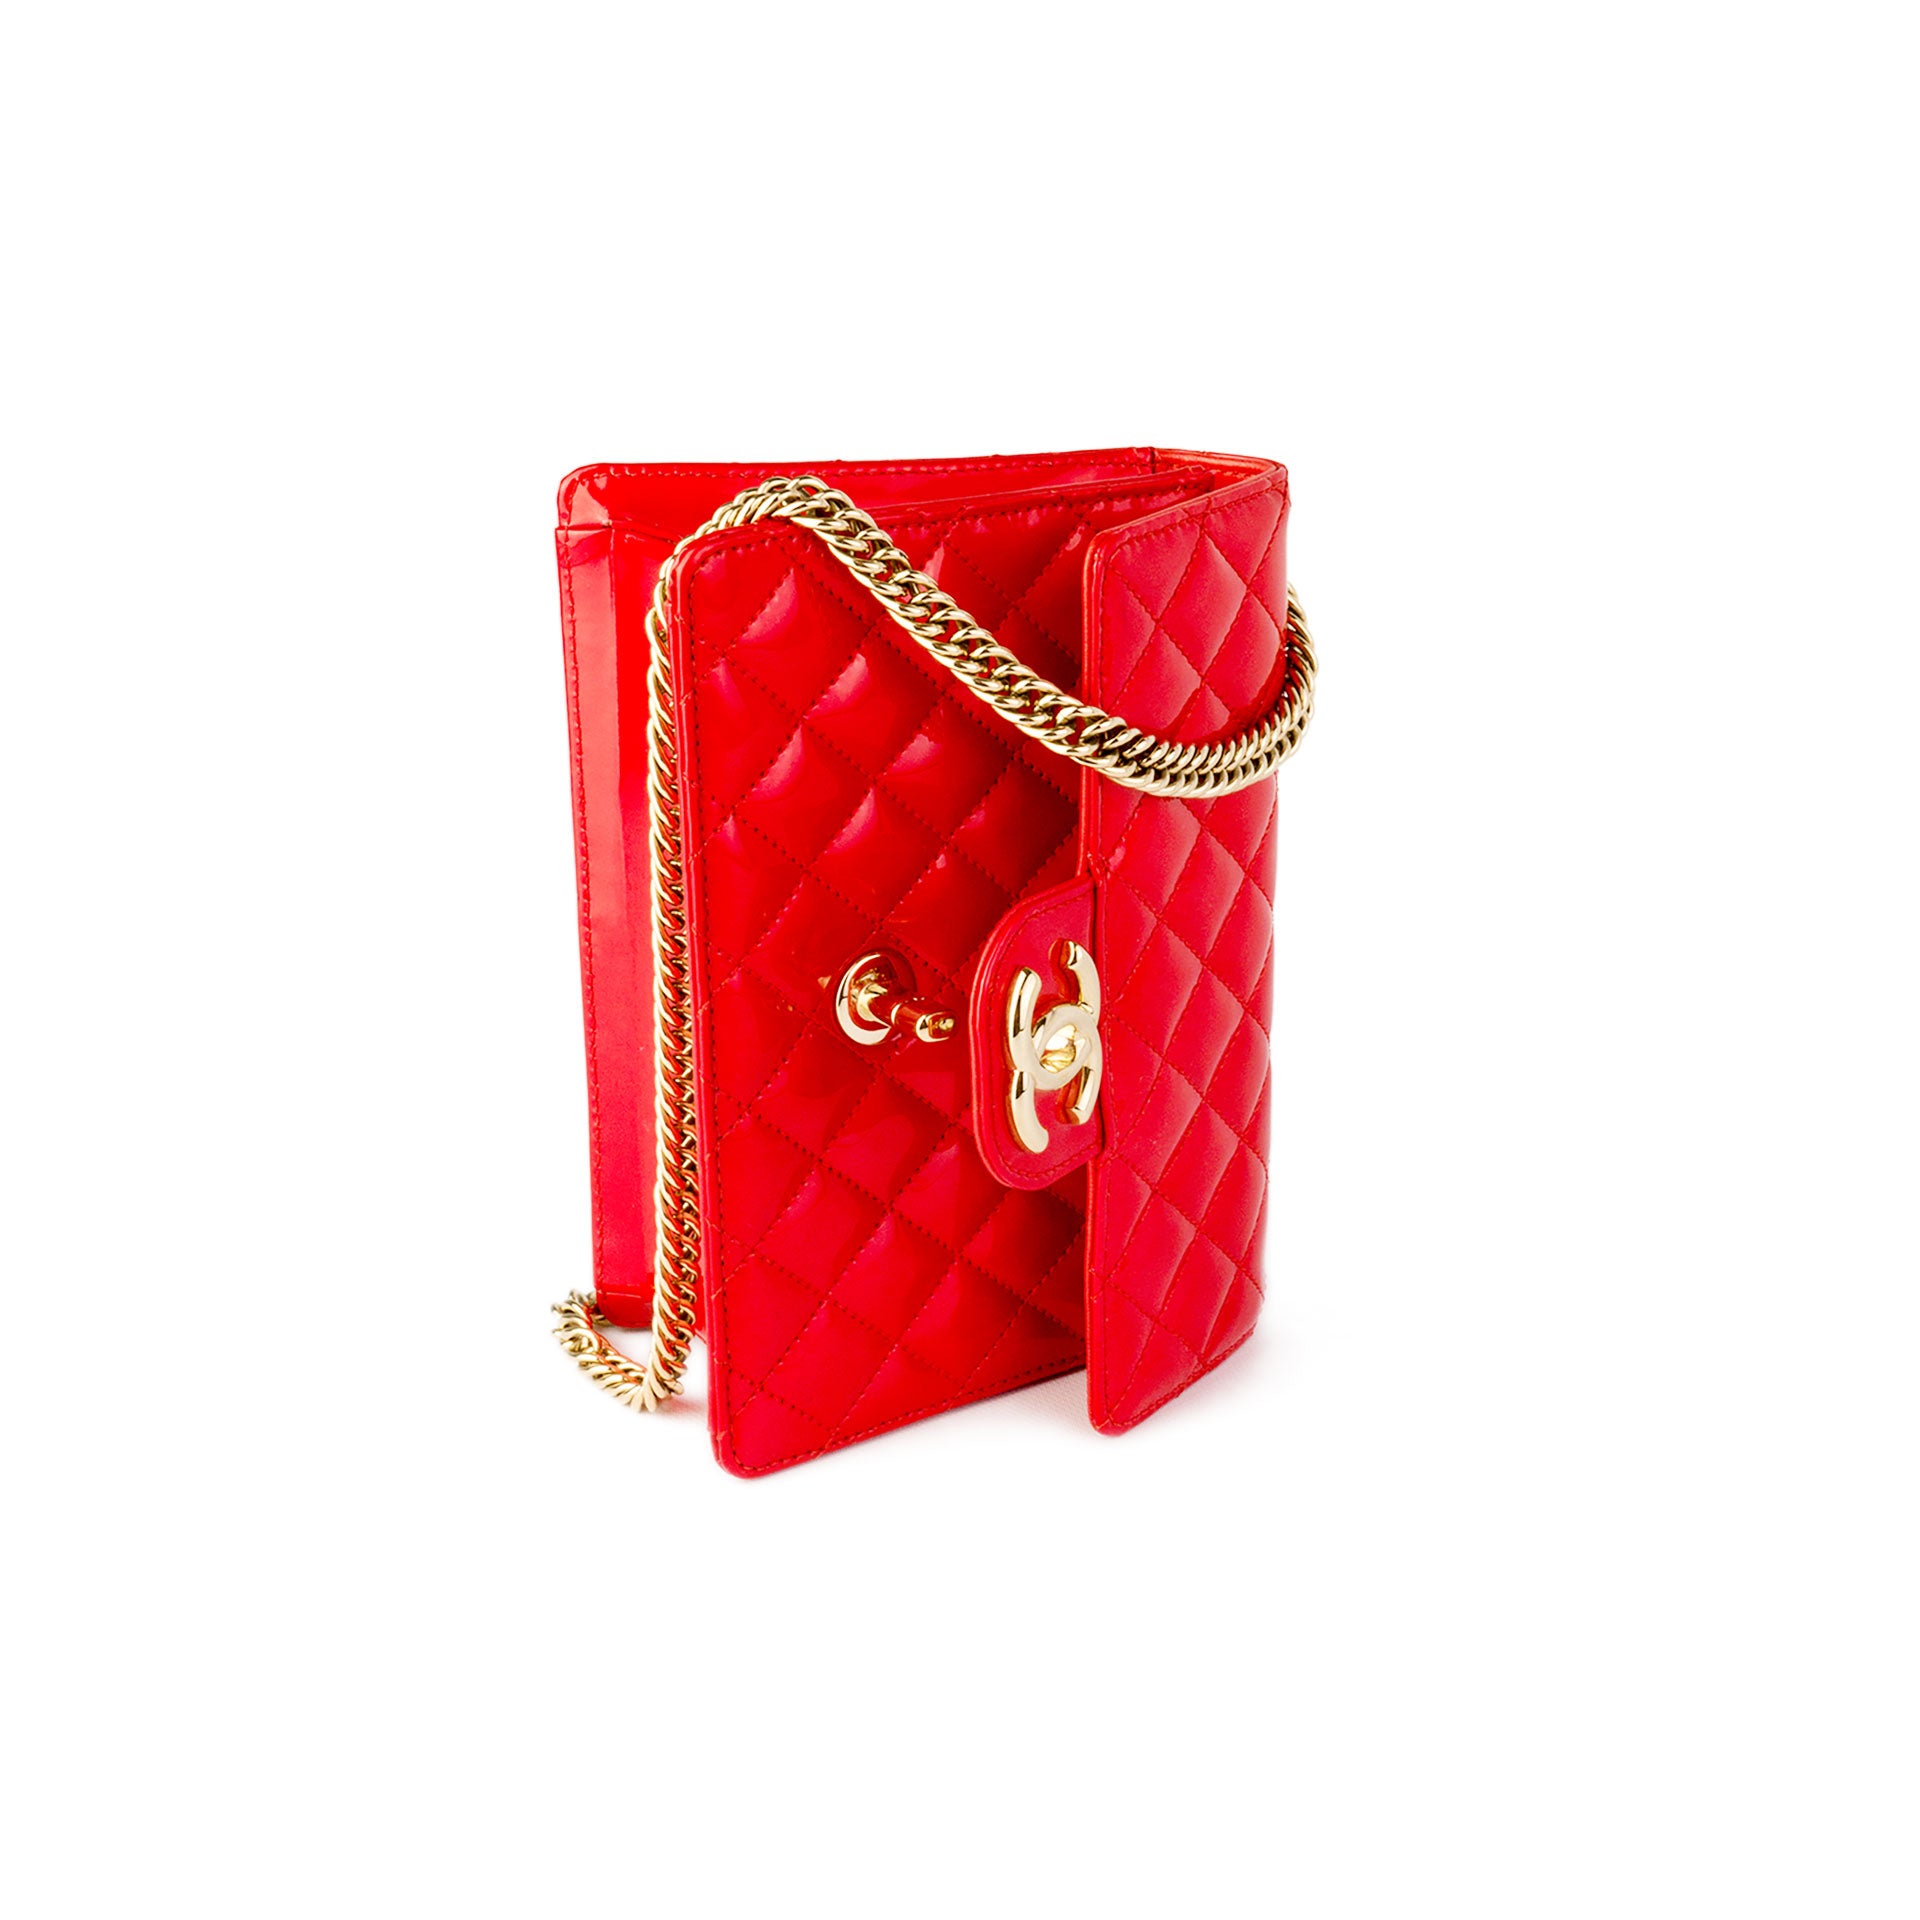 Chanel Rare Vintage Red Mini Patent Classic Flap